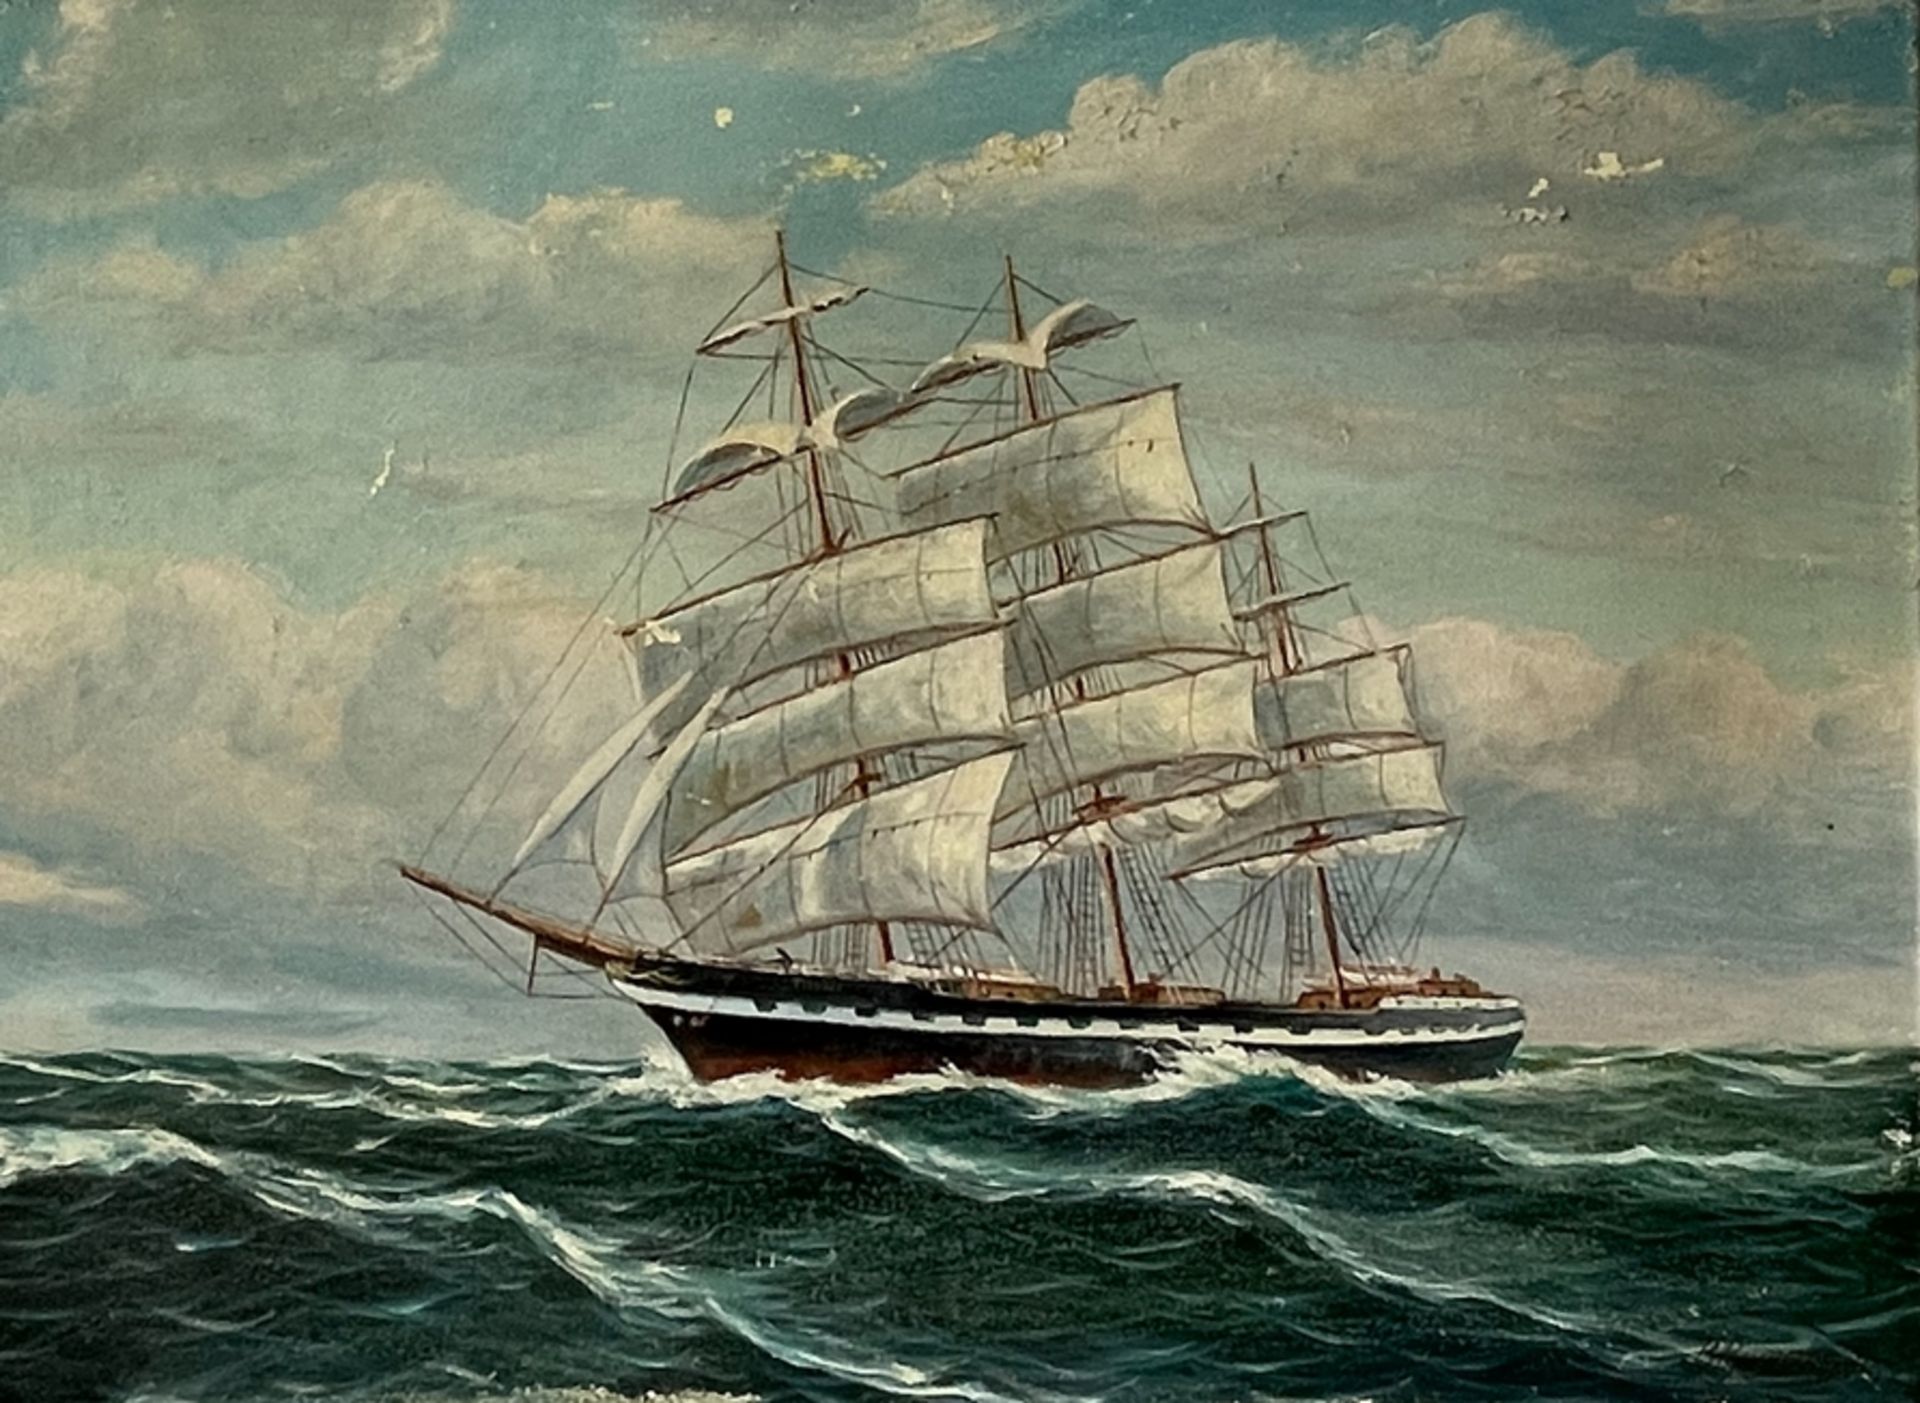 Gemälde "Großes Segelschiff"